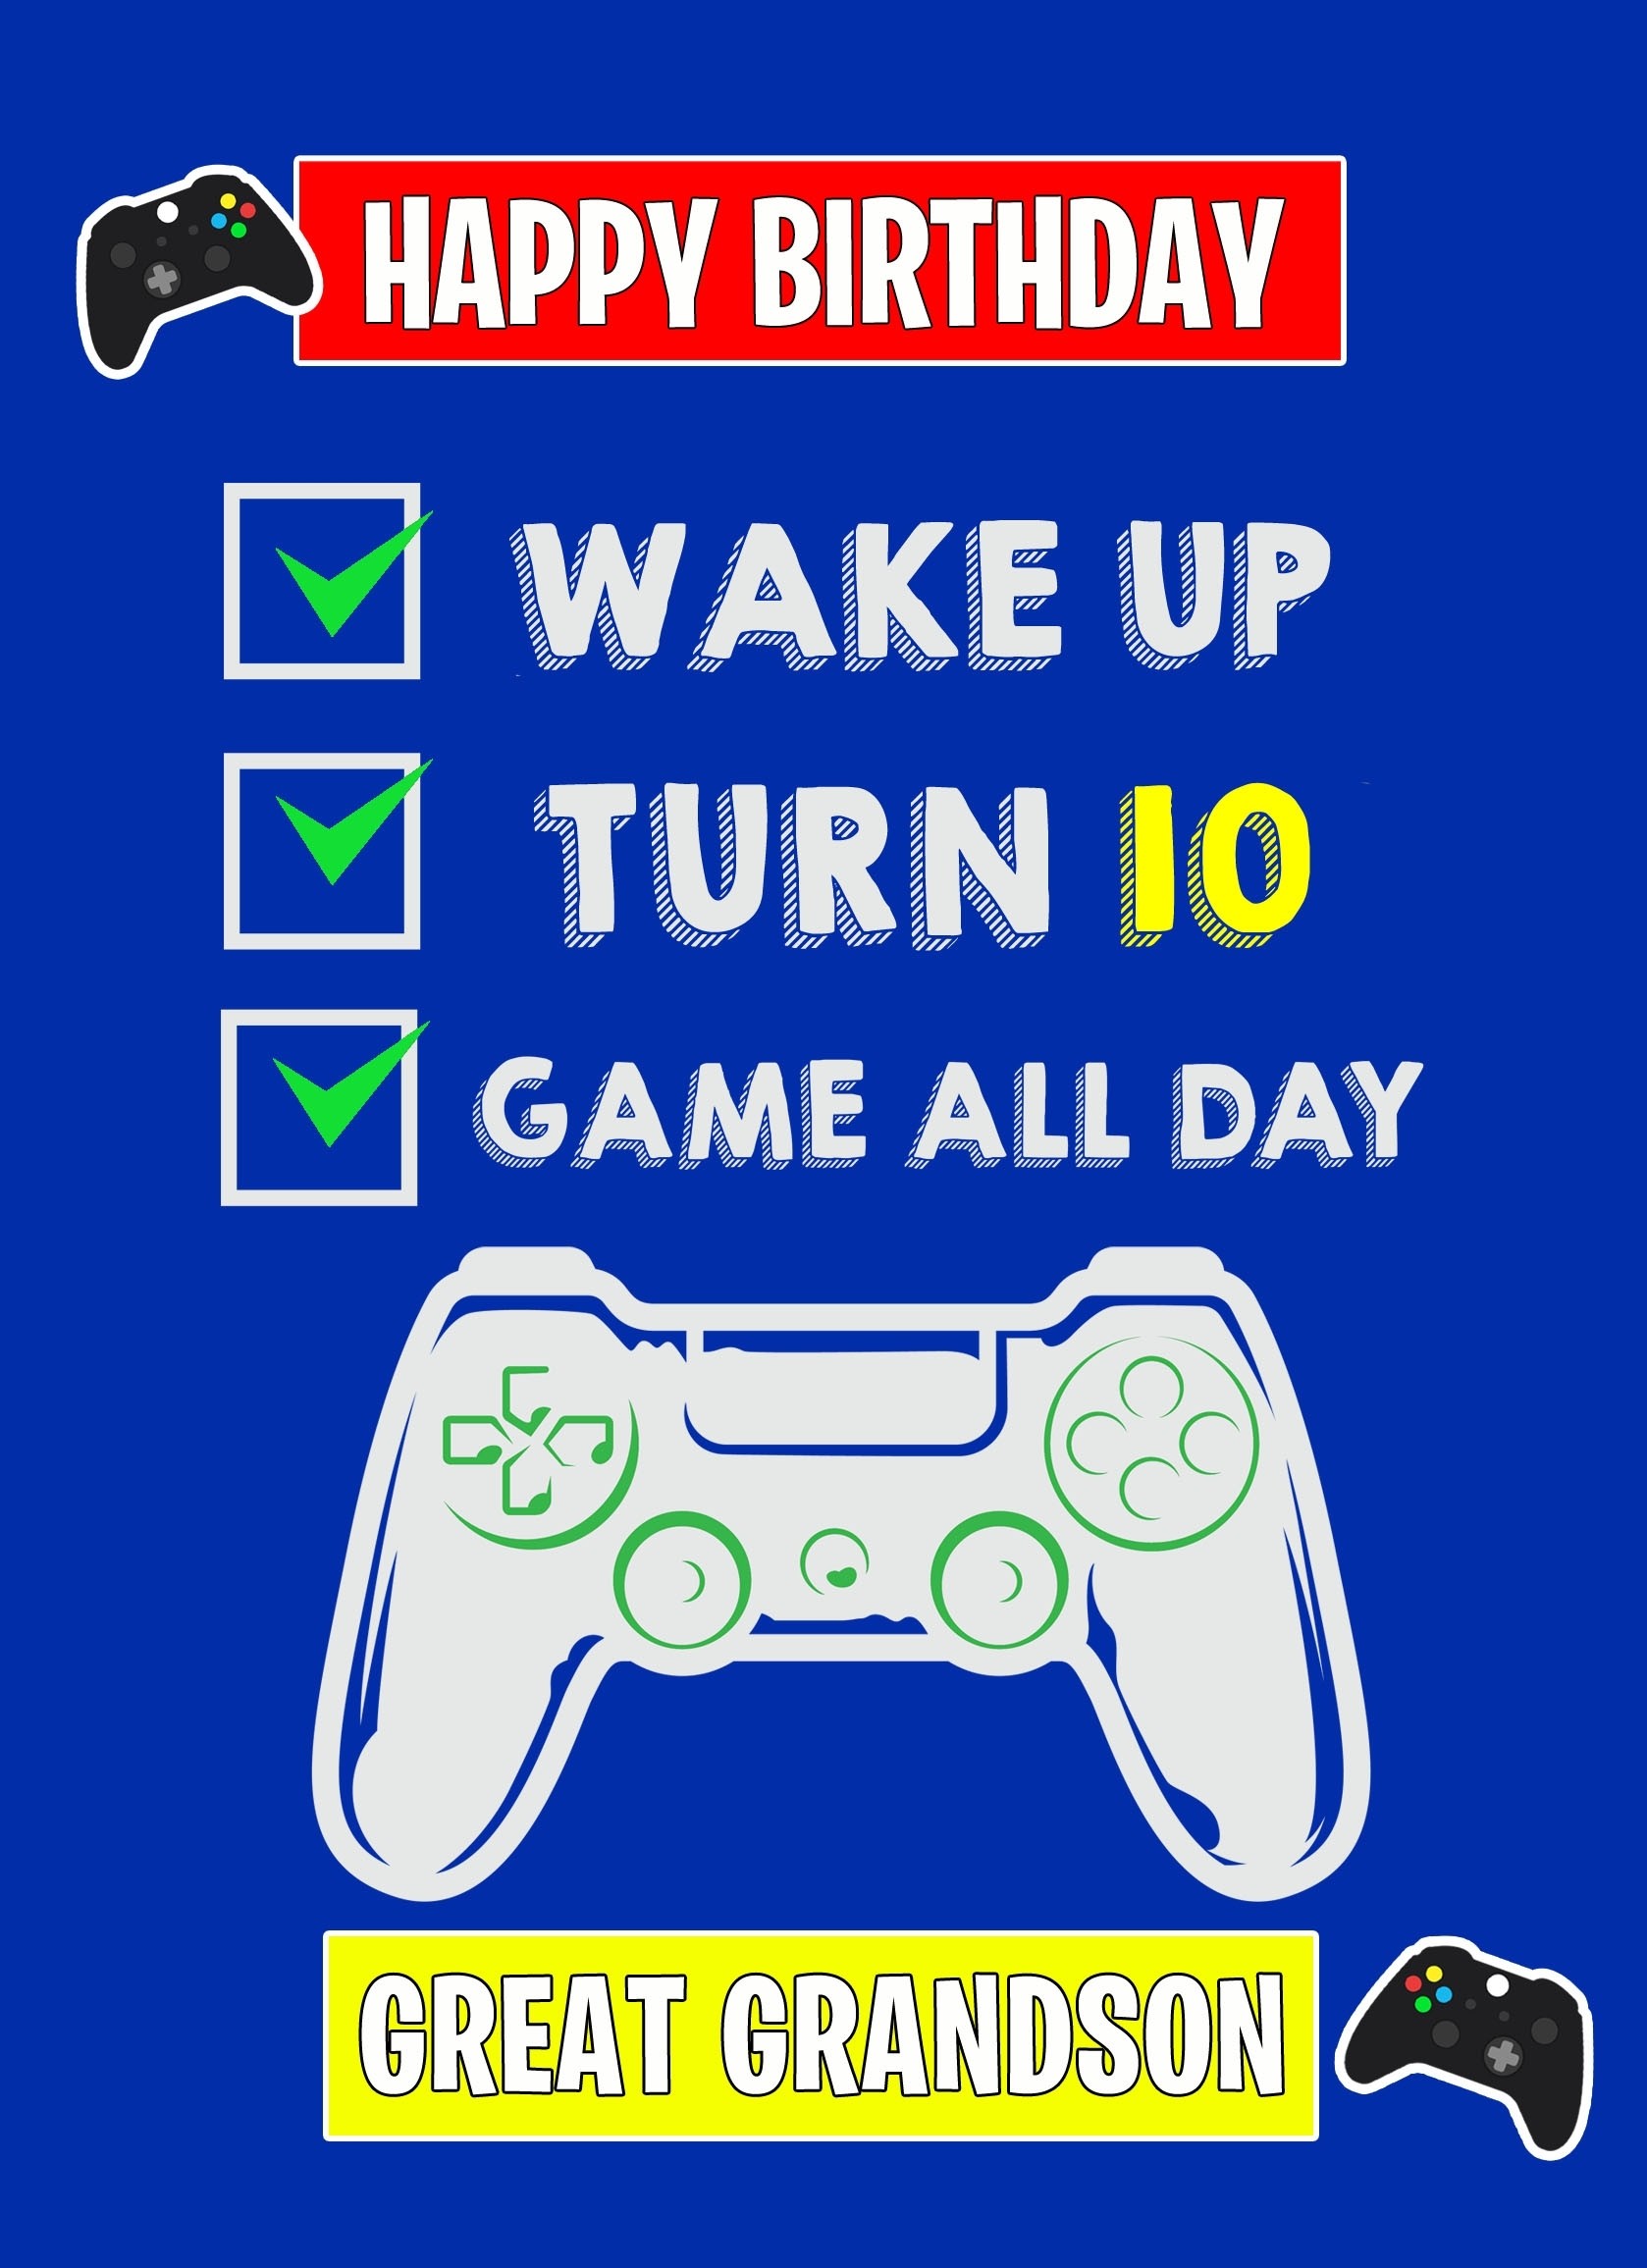 10th Level Gamer Birthday Card For Great Grandson